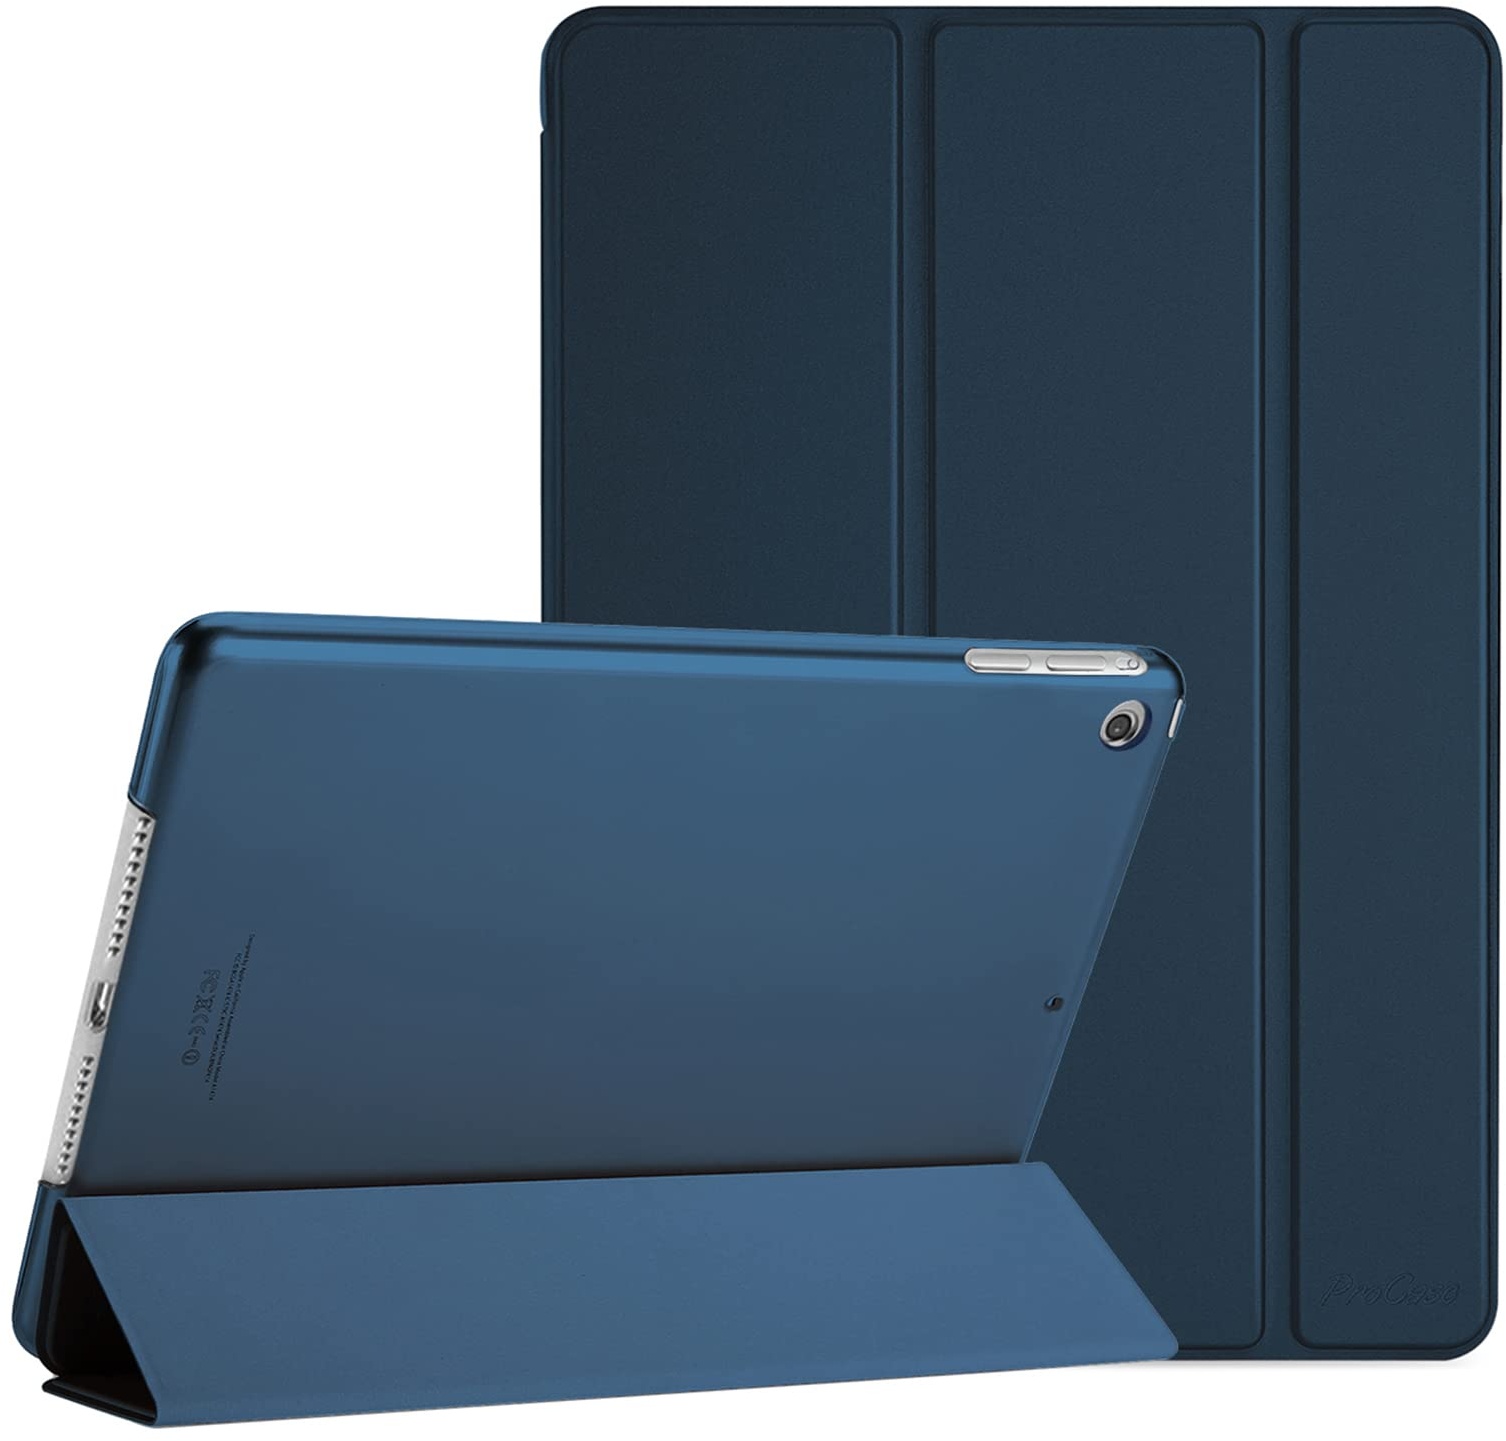 ProCase iPad Mini 1 Hülle, iPad Mini 2 Hülle, iPad Mini 3 Hülle - Ultra Slim Leichter Standcase mit Translucent Frosted Back Smart Cover für 7.9" Apple iPad Mini 1, Mini 2, Mini 3 –Navy